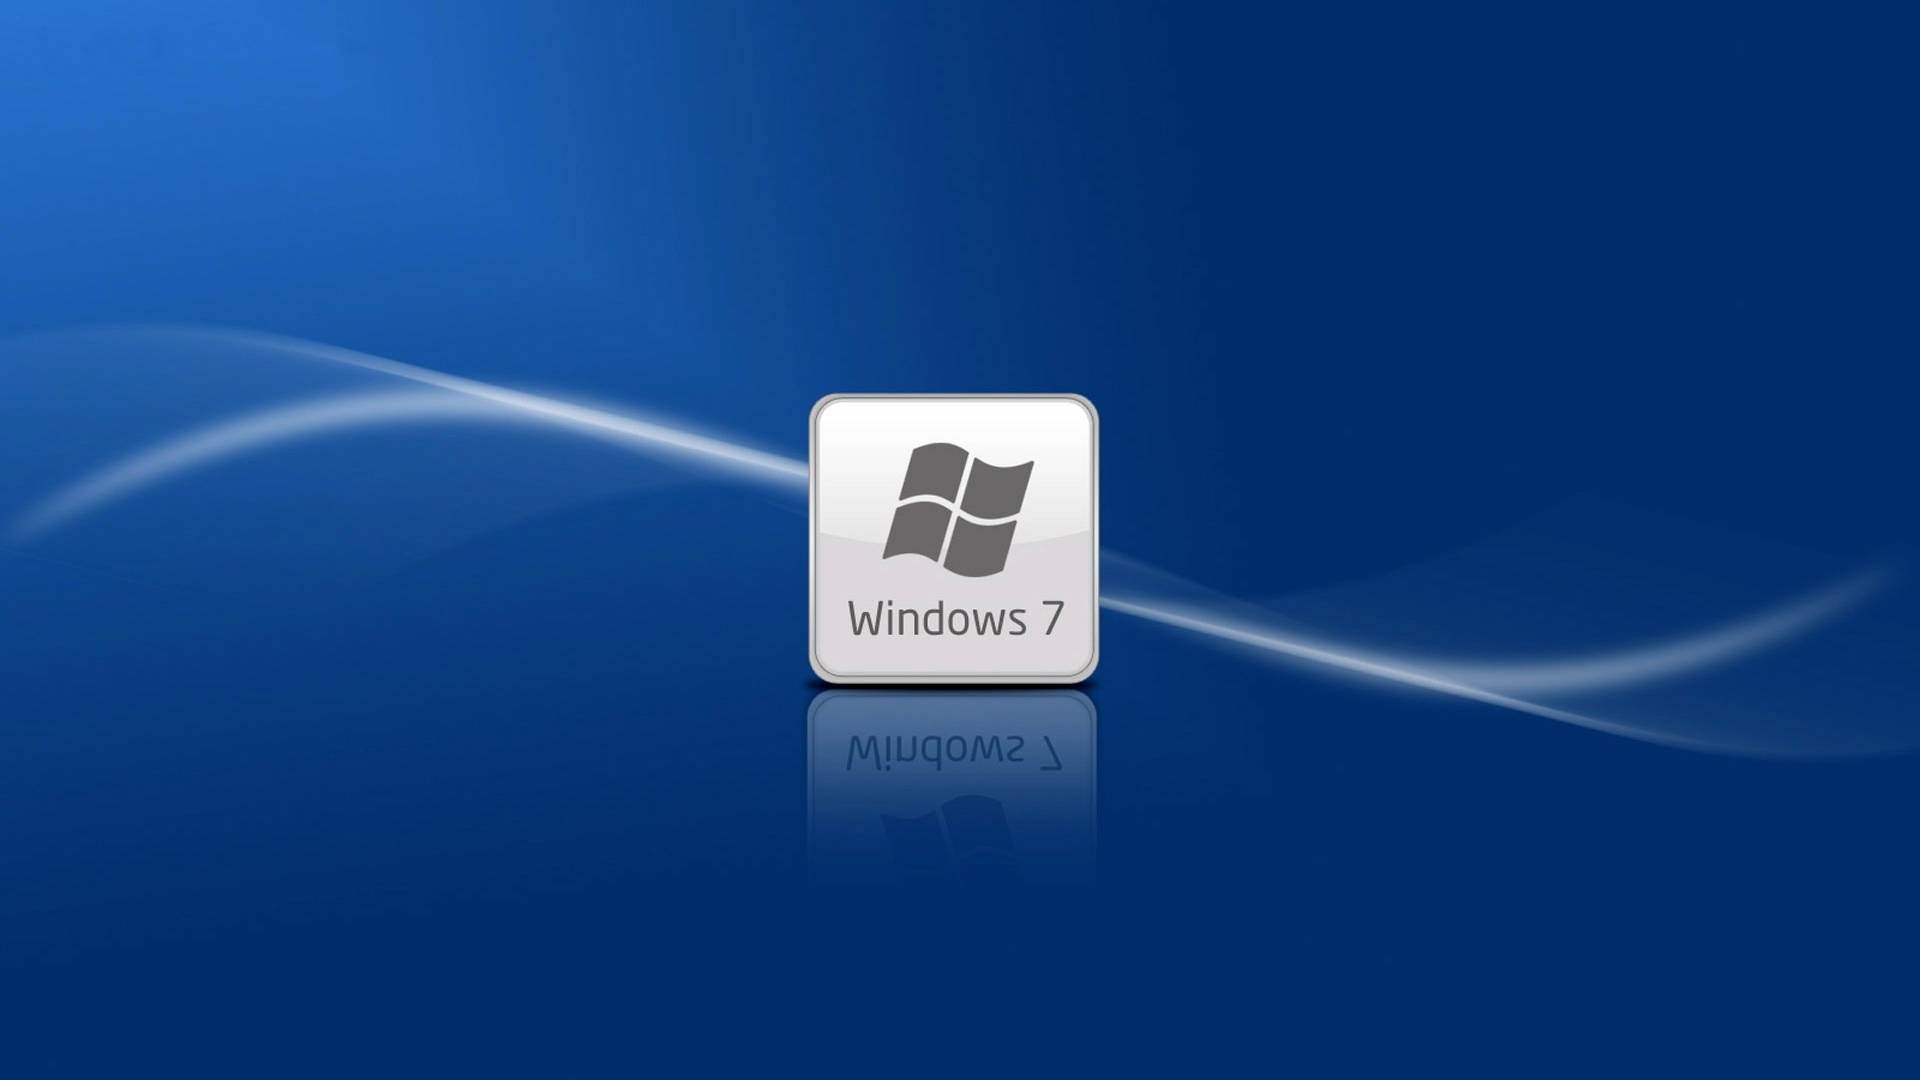 Windows 7 Hd Wallpapers 2 Wallpaper